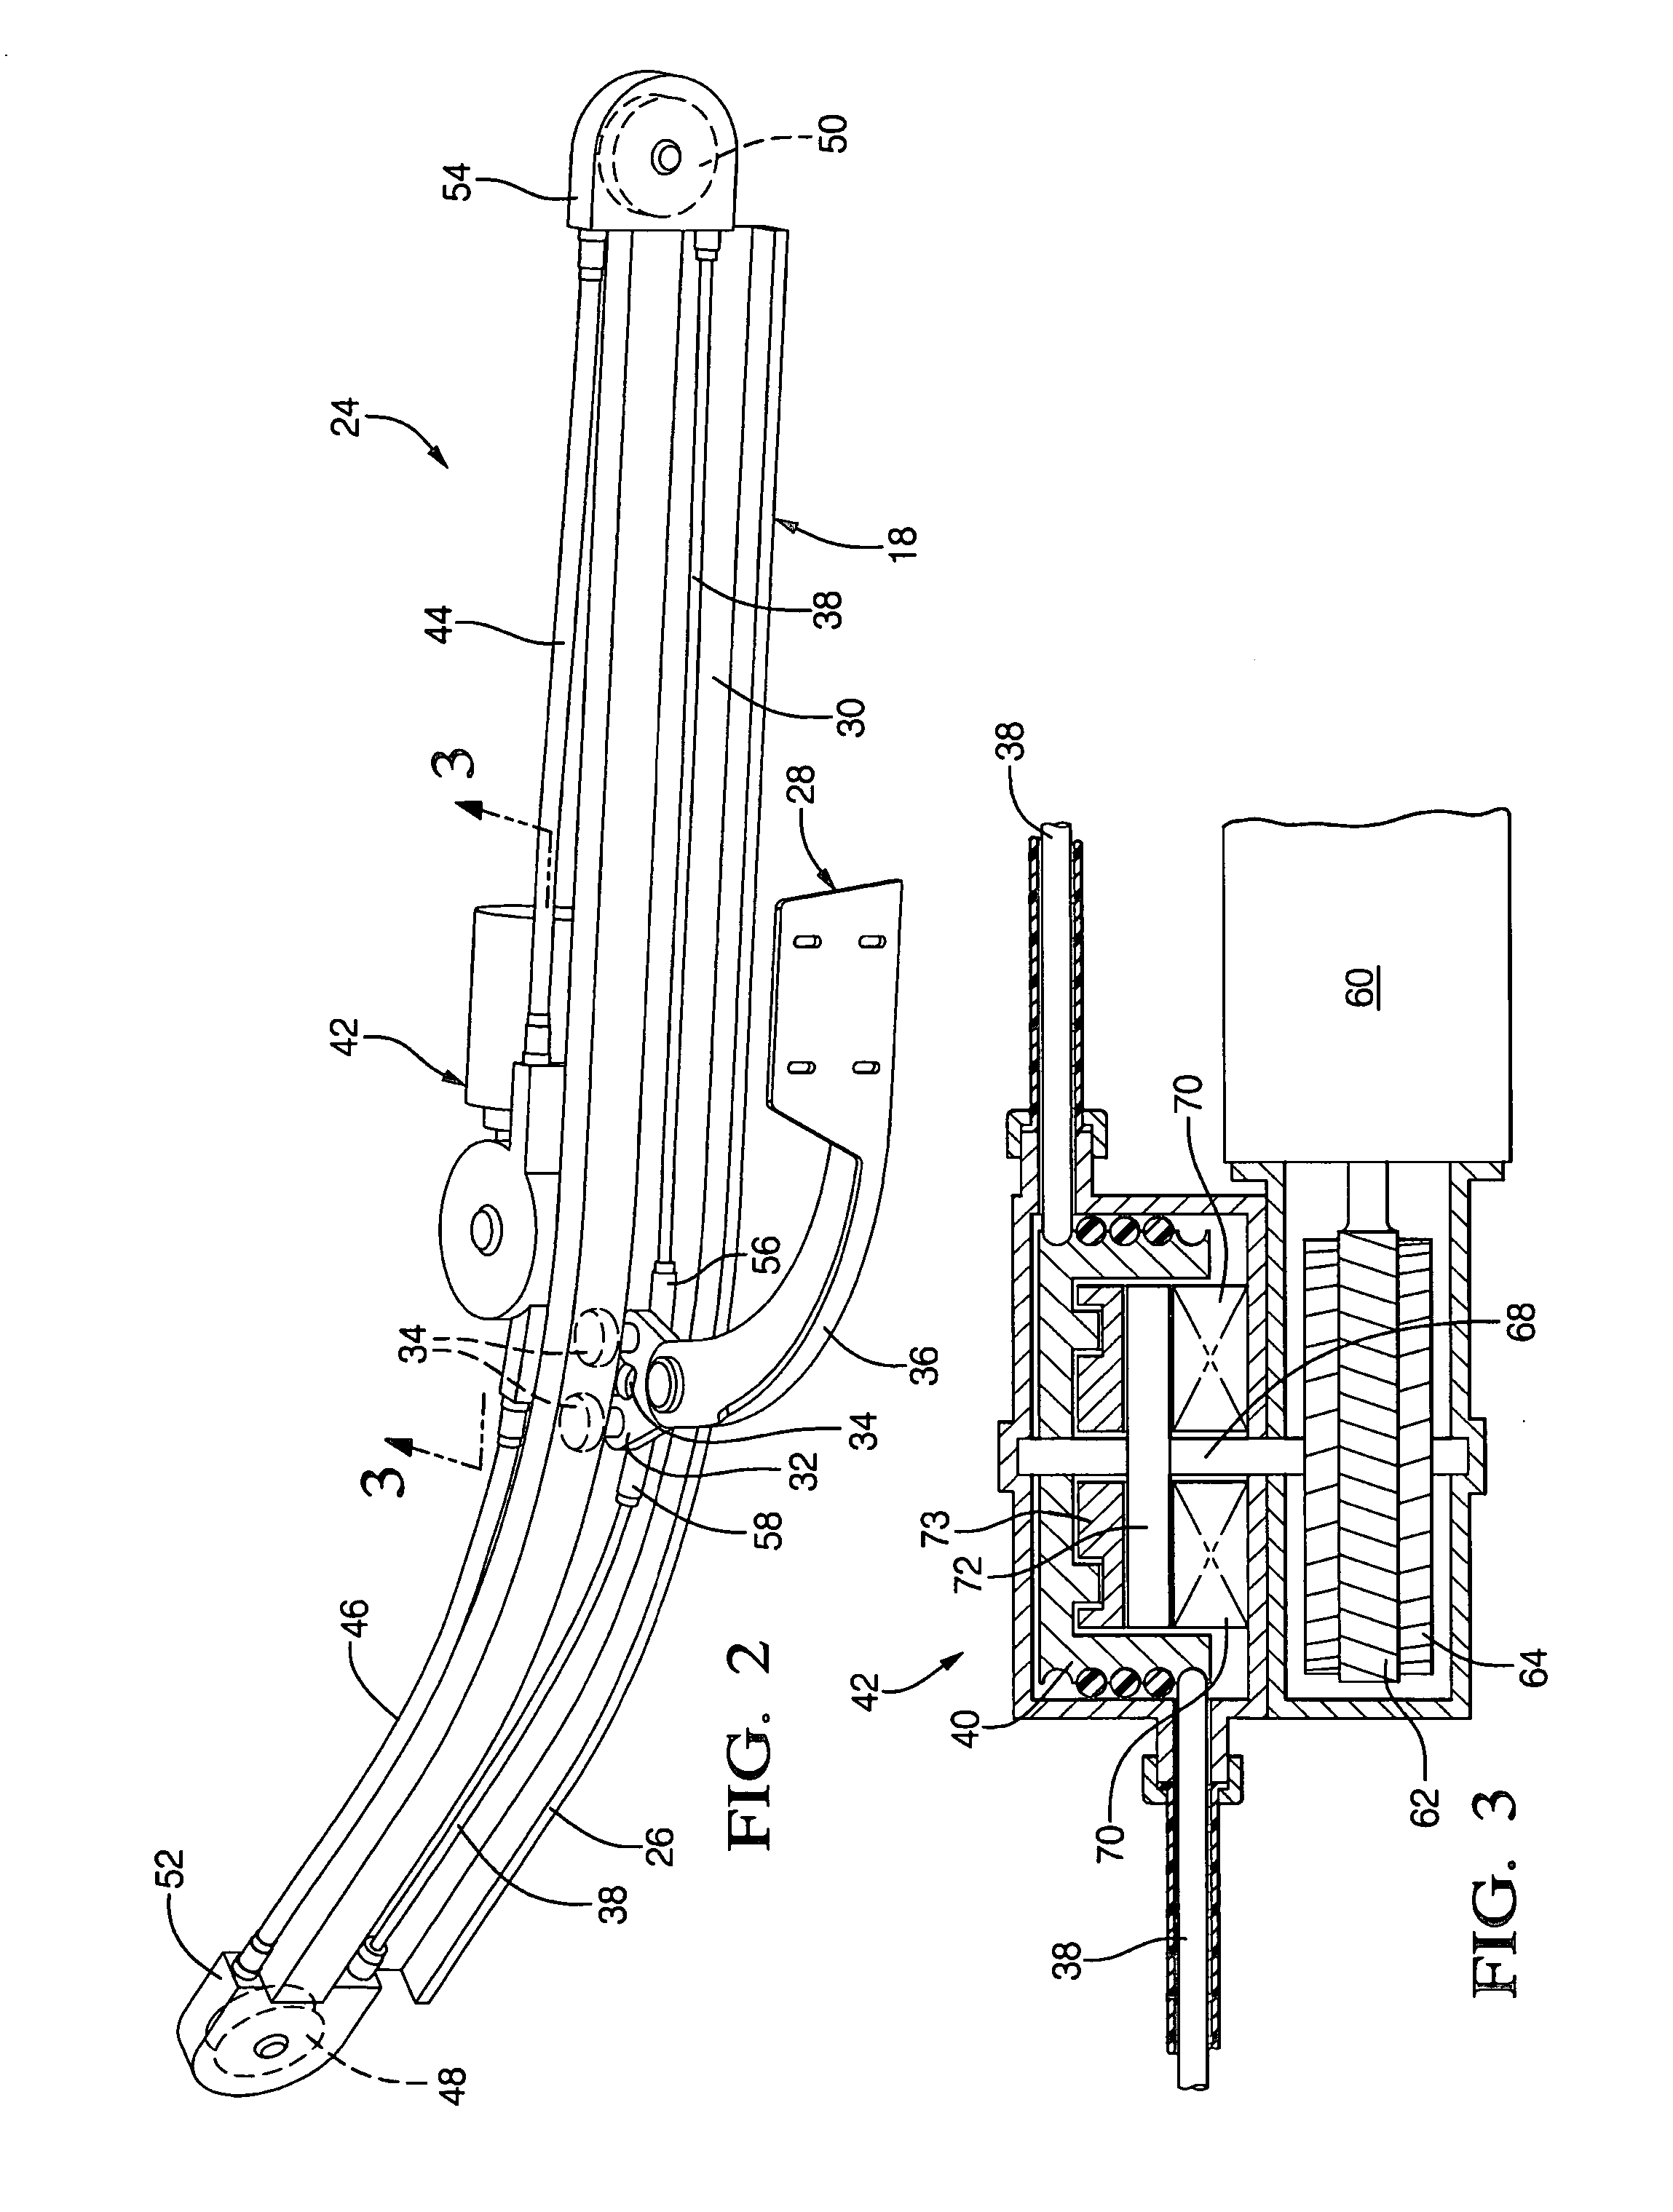 Apparatus and method for providing a modular sliding door mechanism